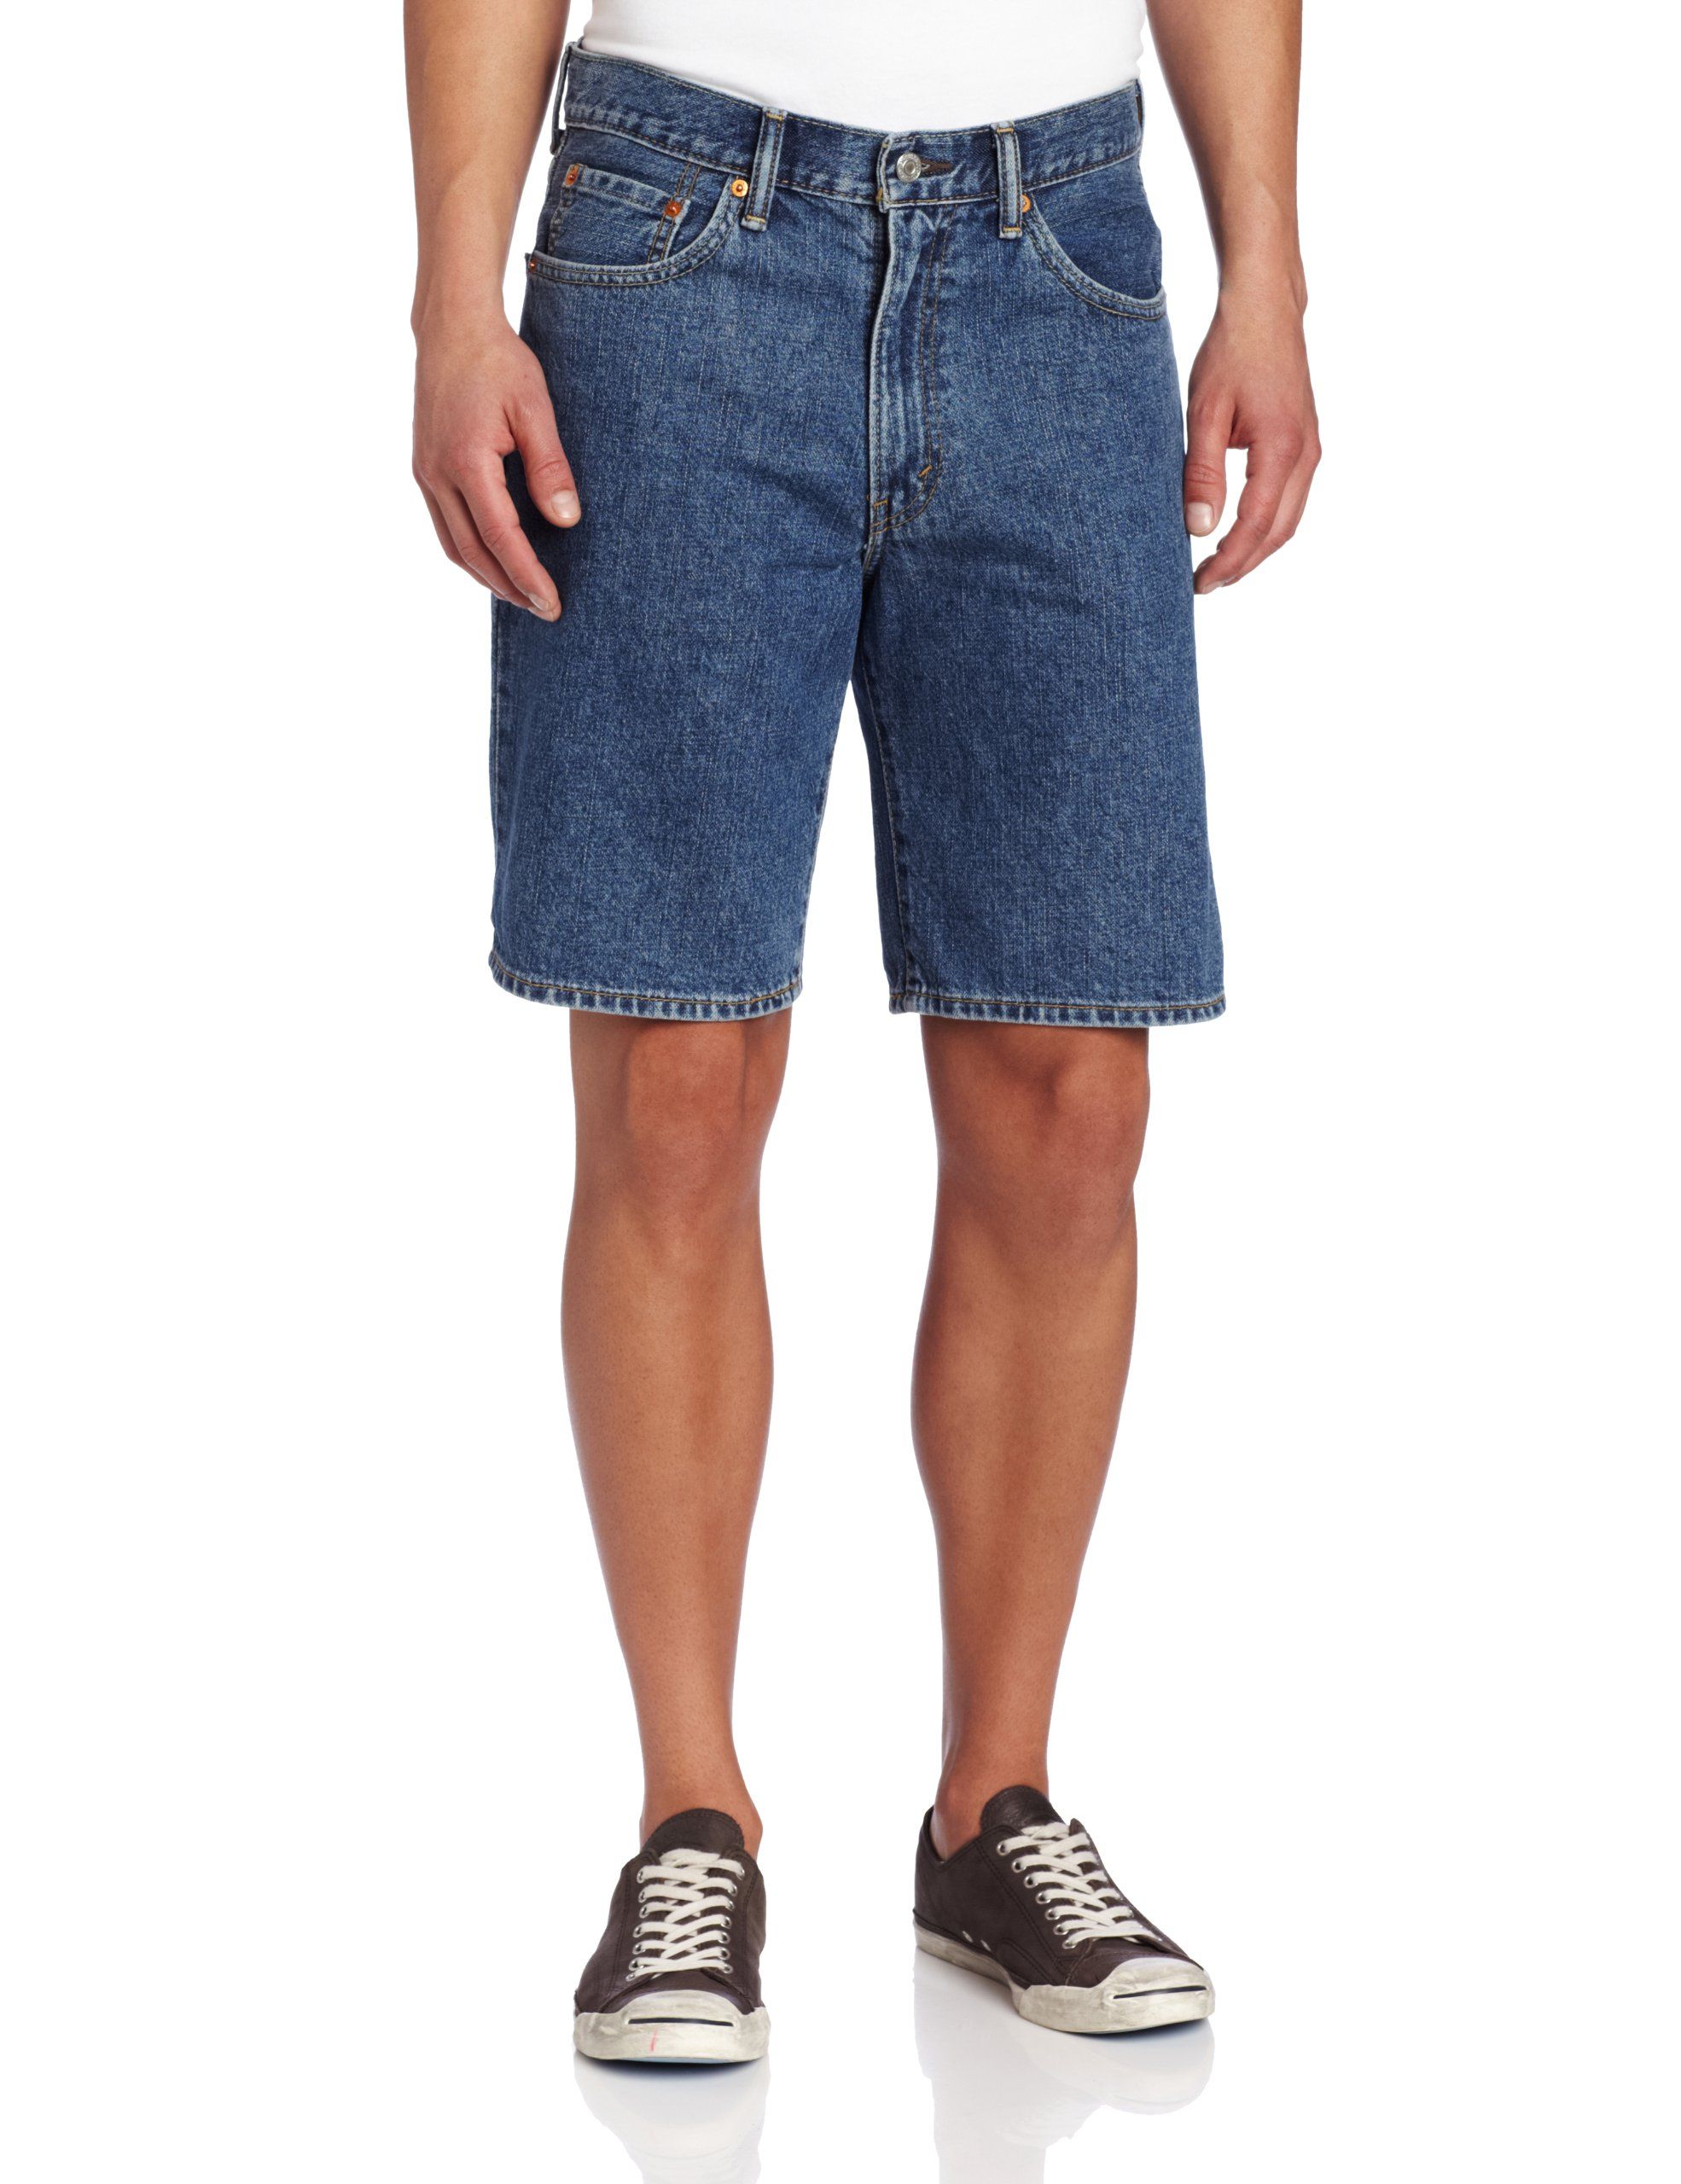 Dockers | Mens Size 40 Blue/Grey Chino Shorts | Grey chinos, Chino shorts,  Chino shorts mens